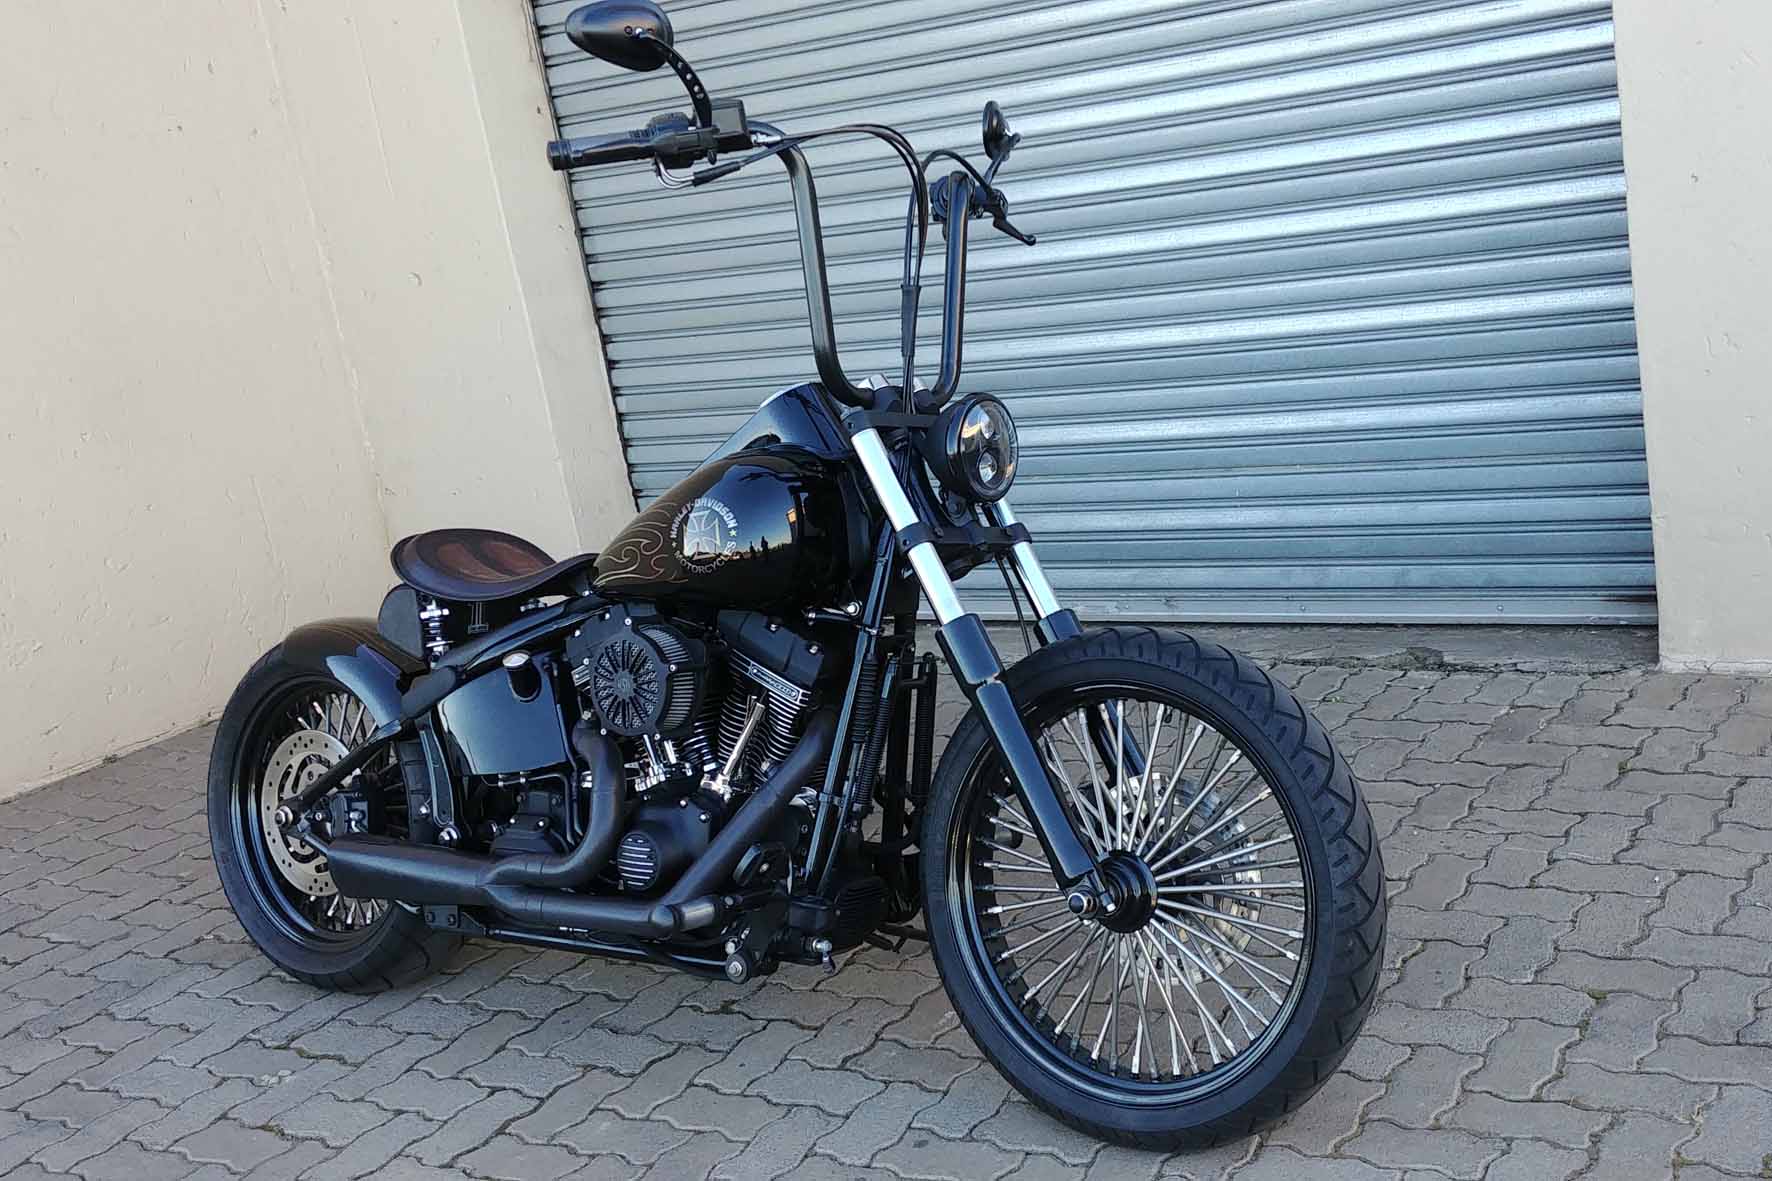  Harley  Davidson  Softail Fatboy for sale SAC Raging Bull